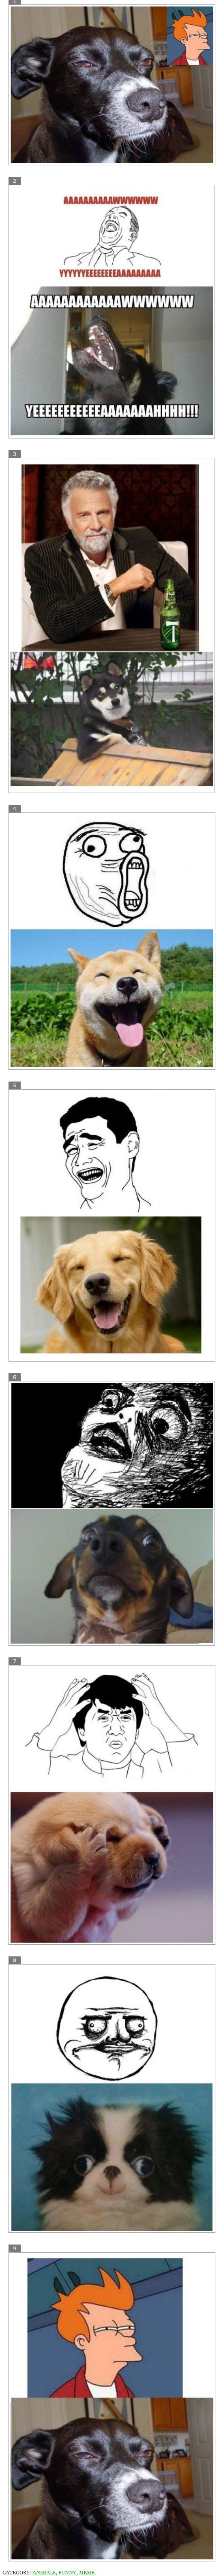 Dogs Recreating Meme Faces